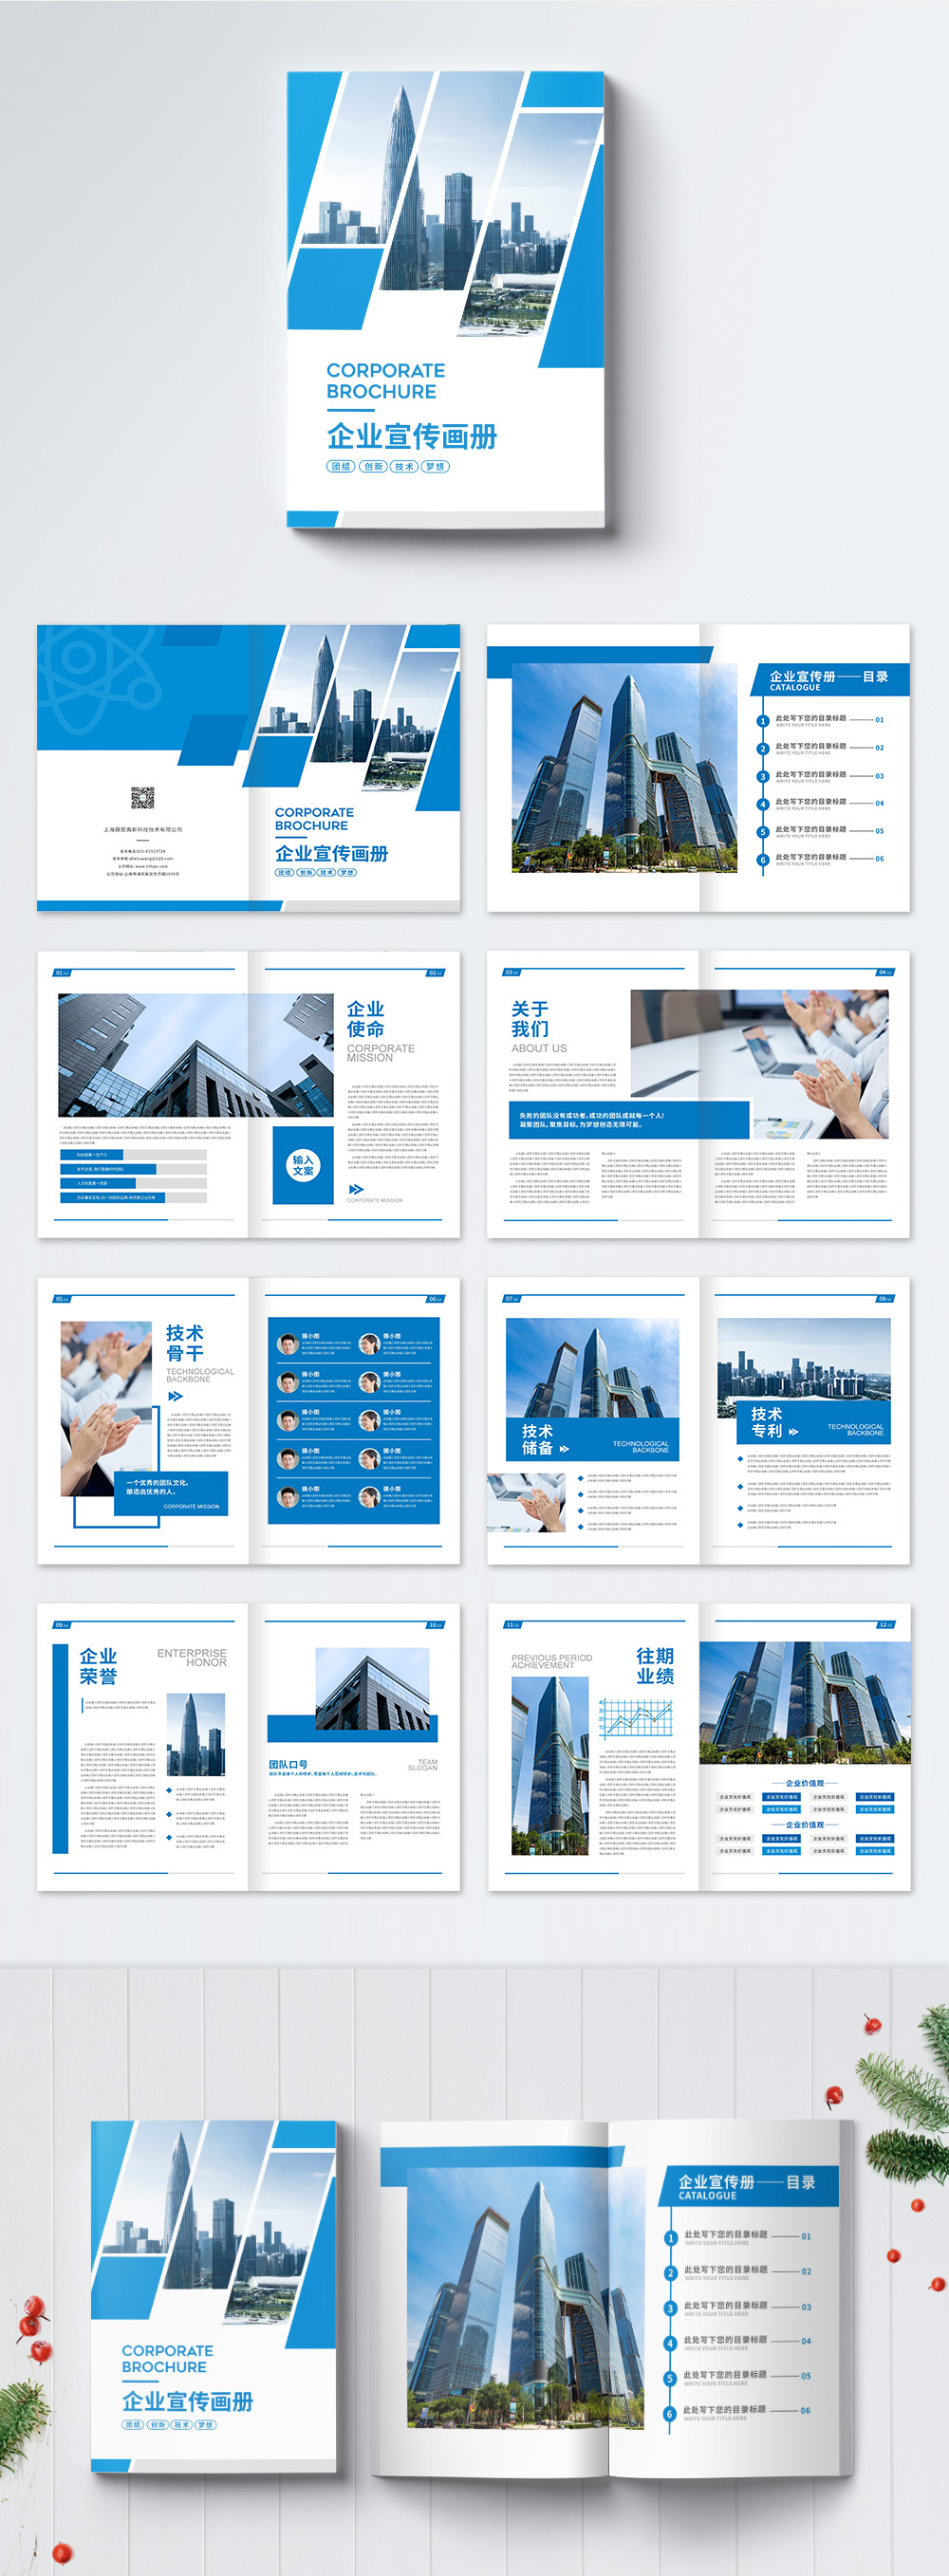 Simple premium enterprise company brochure template template image ...